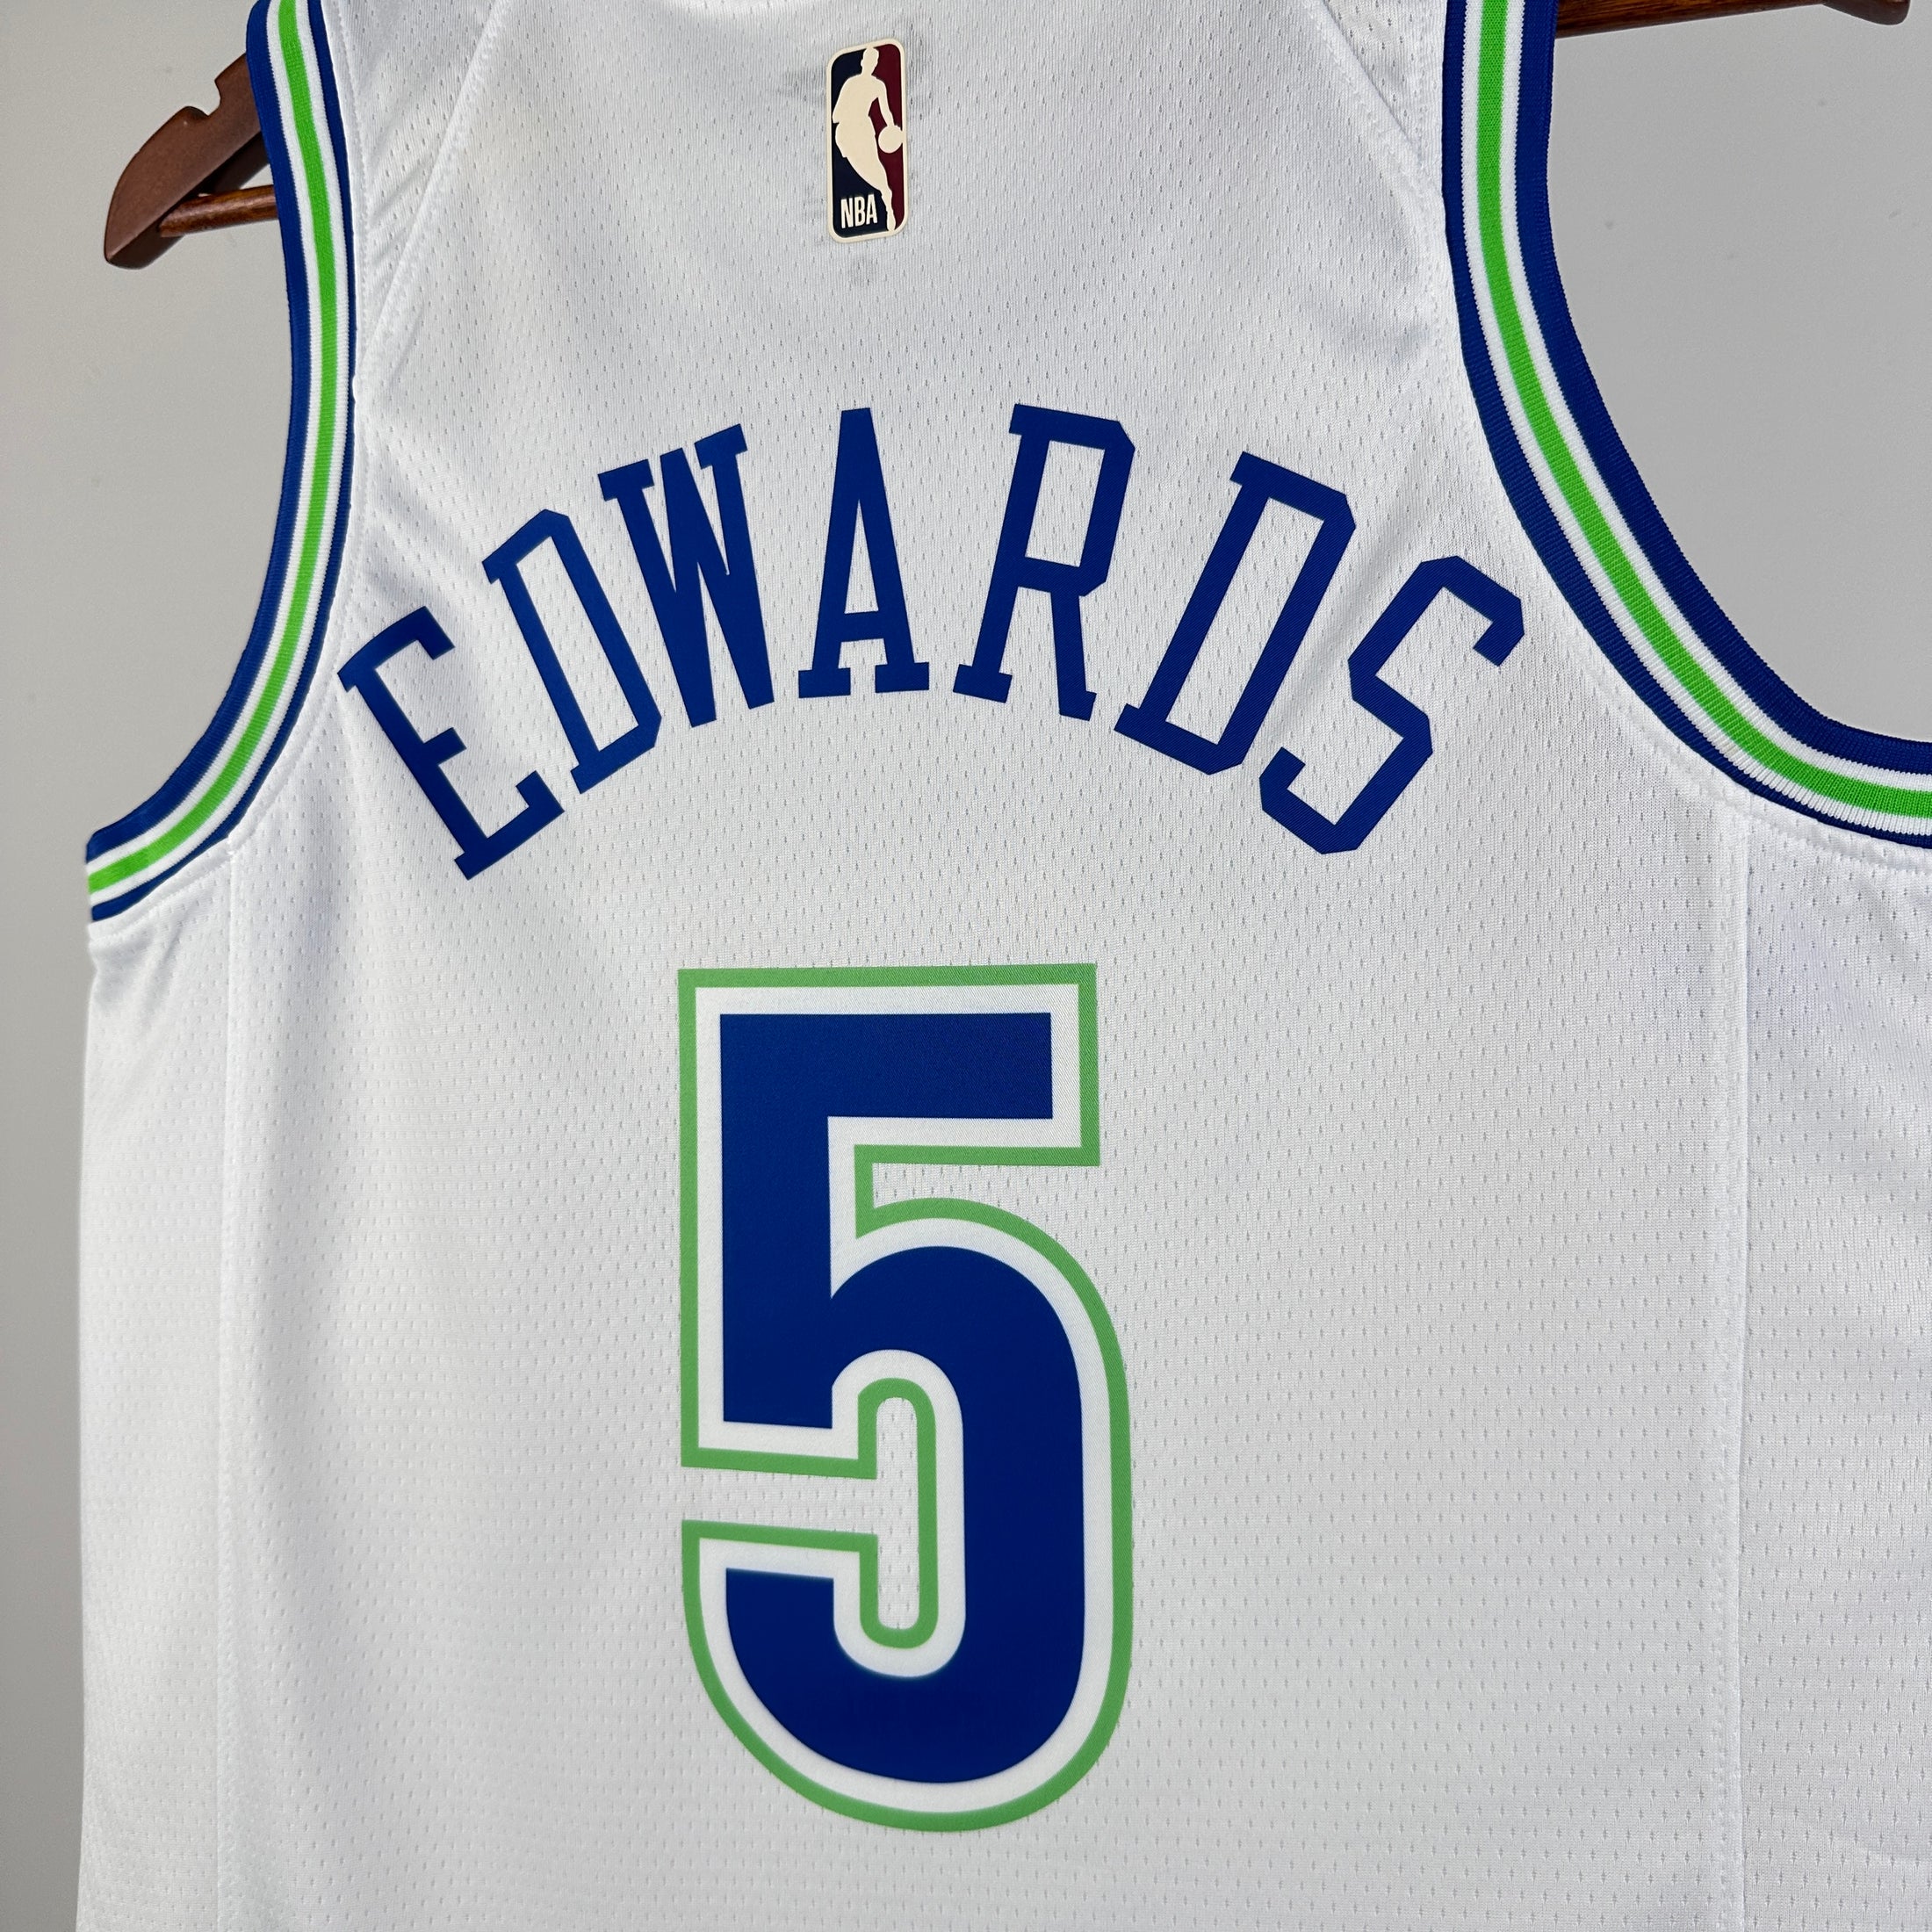 Anthony Edwards #5 Minnesota Timberwolves NBA Standard Size Swingman Jersey